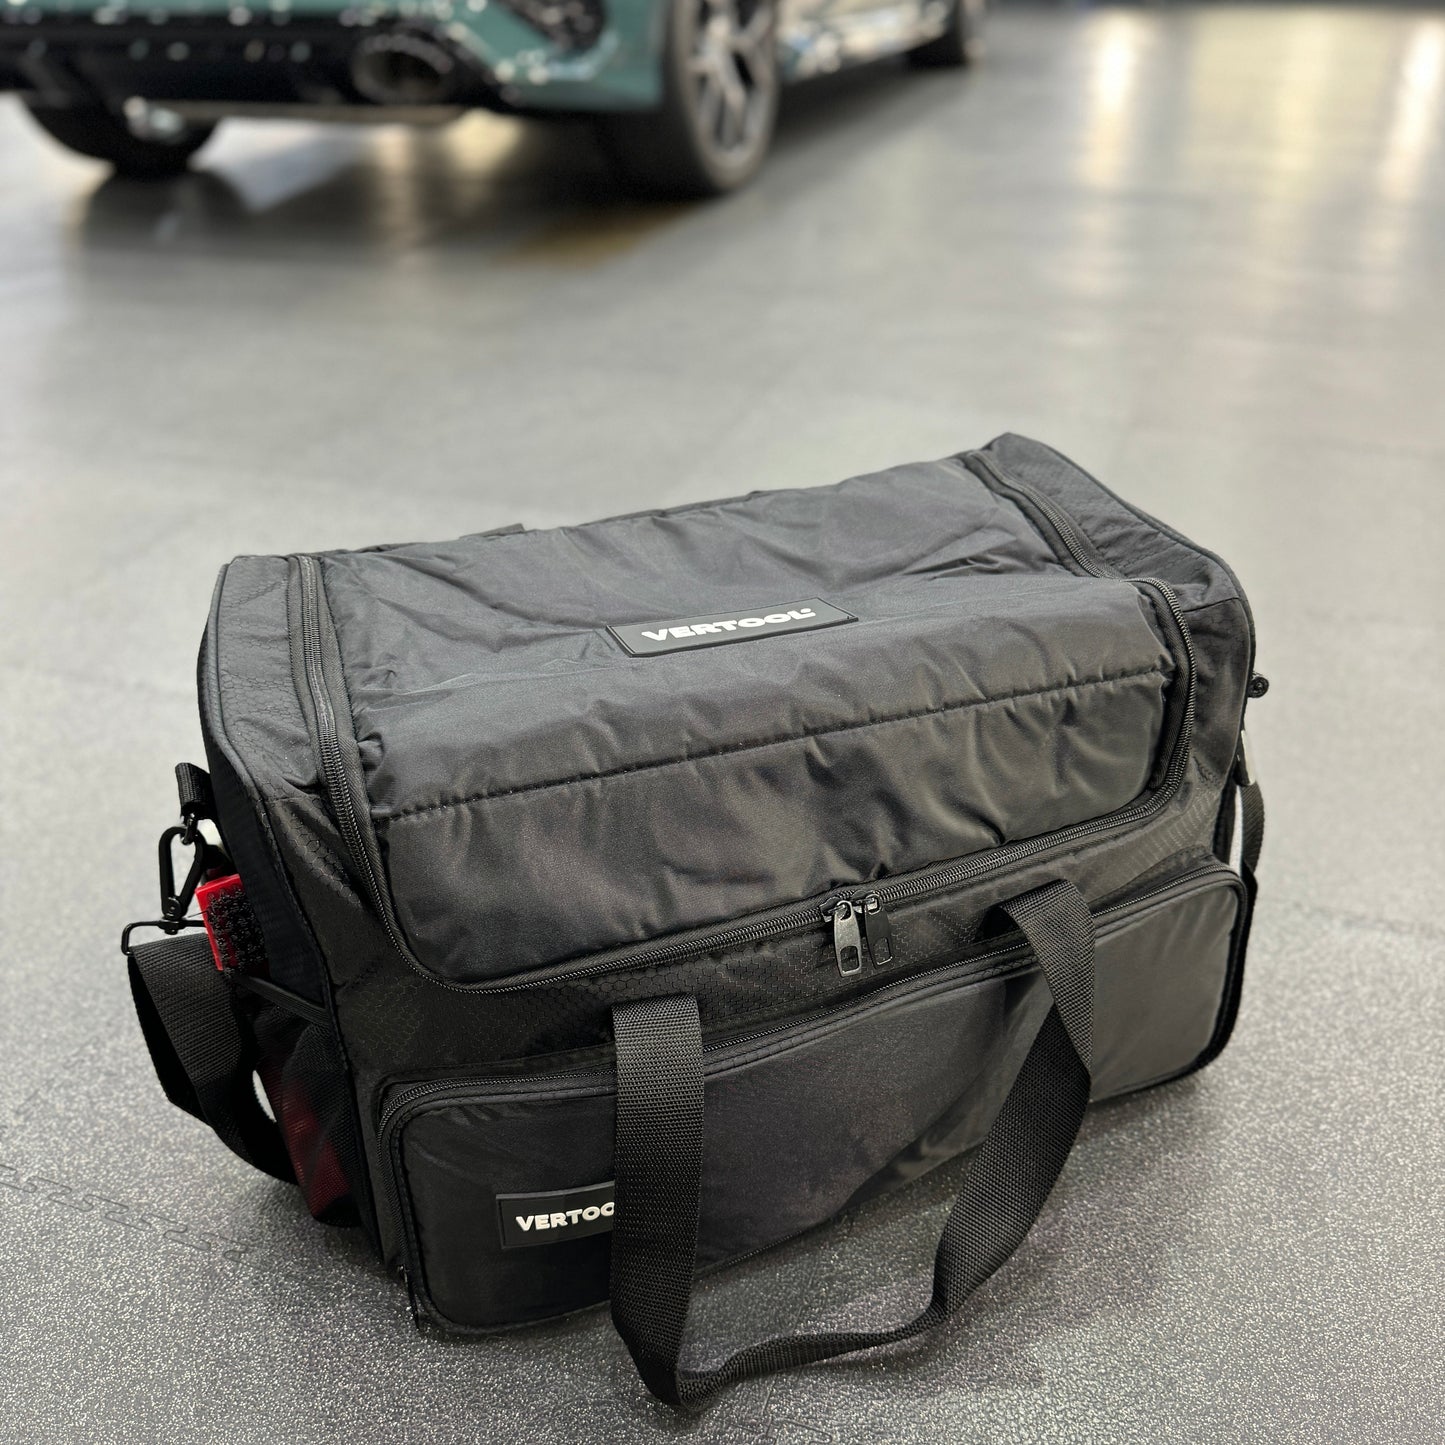 Vertool PRO-XL Detailing Bag